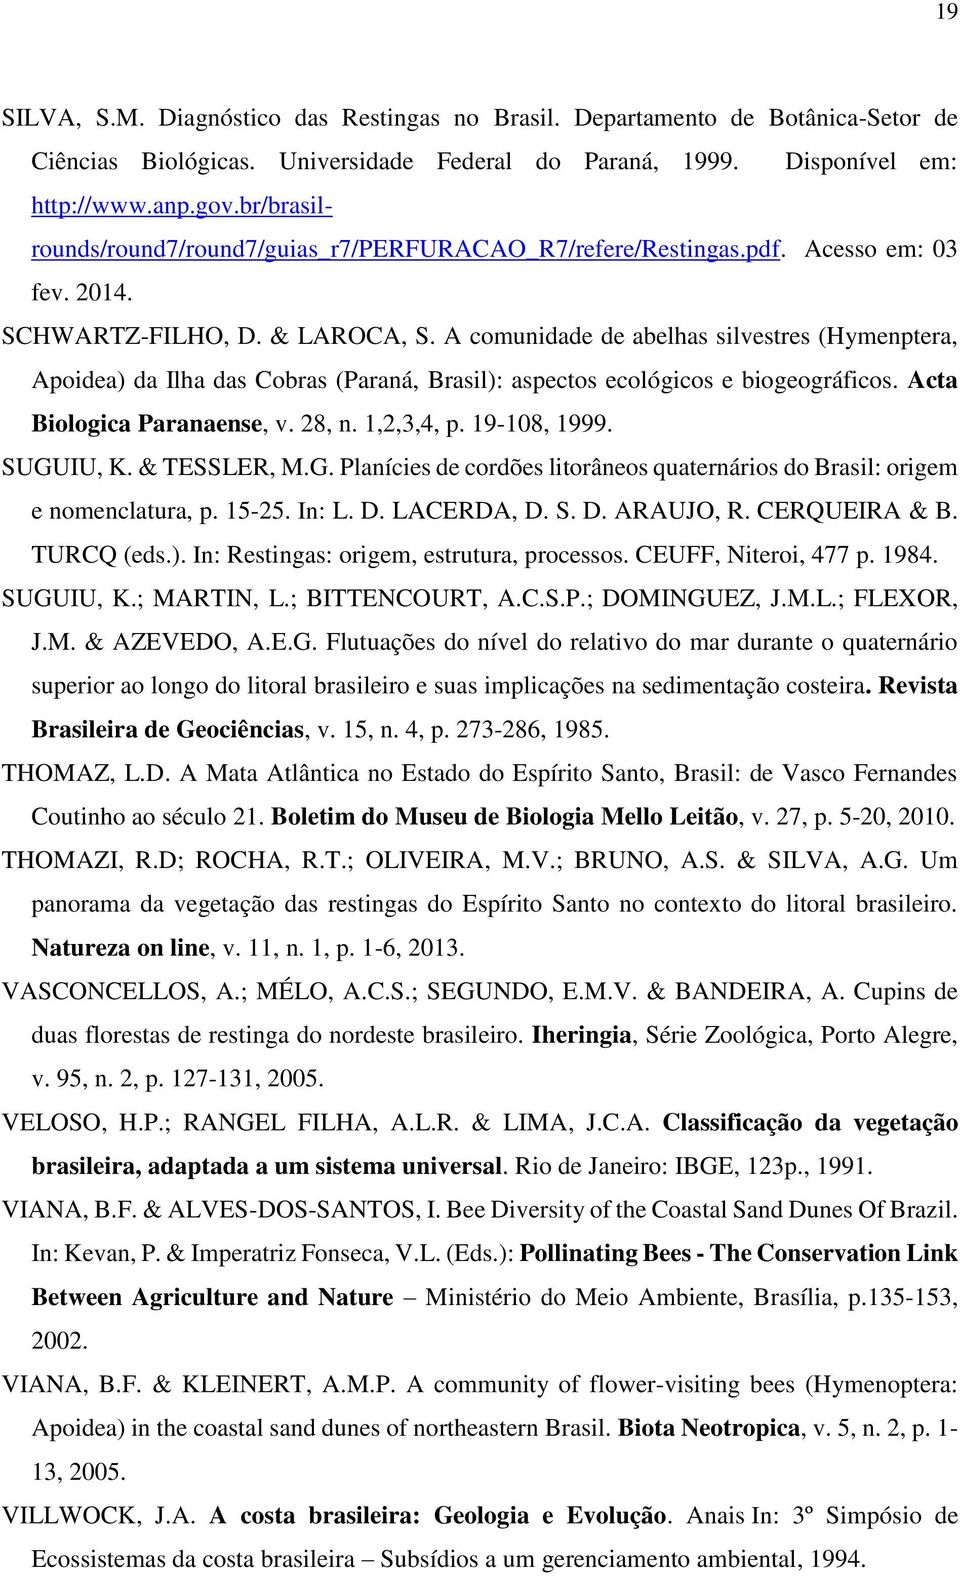 A comunidade de abelhas silvestres (Hymenptera, Apoidea) da Ilha das Cobras (Paraná, Brasil): aspectos ecológicos e biogeográficos. Acta Biologica Paranaense, v. 28, n. 1,2,3,4, p. 19-108, 1999.